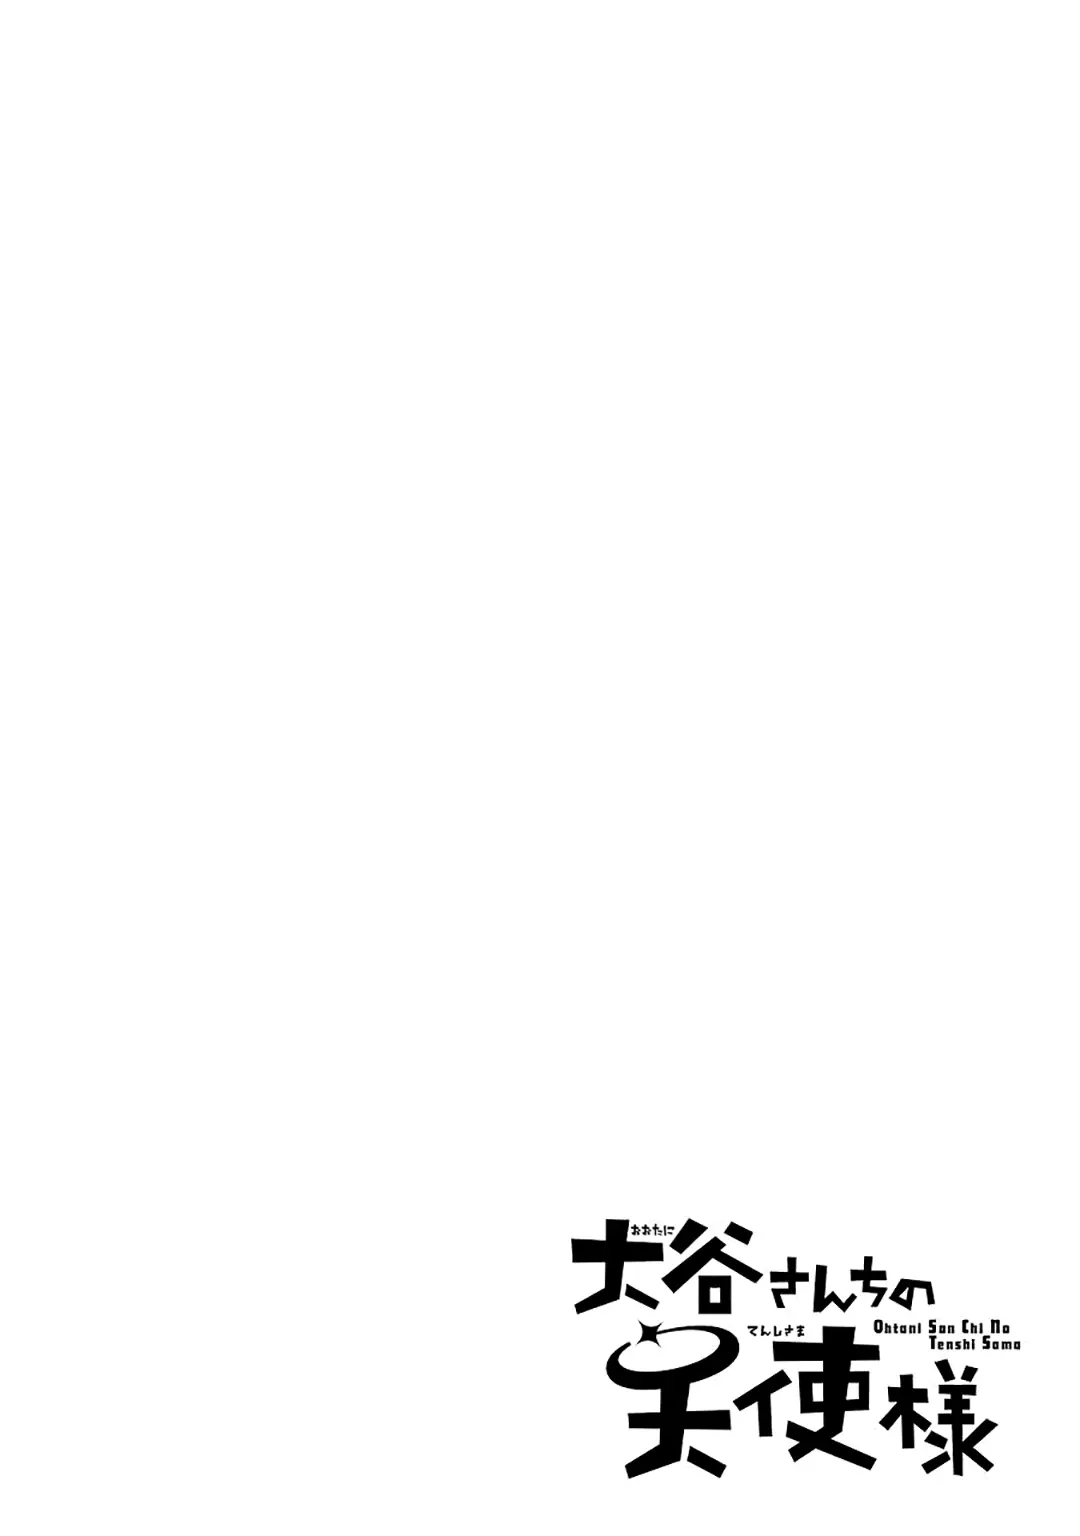 Ootani-San Chi No Tenshi-Sama - 13 page 1